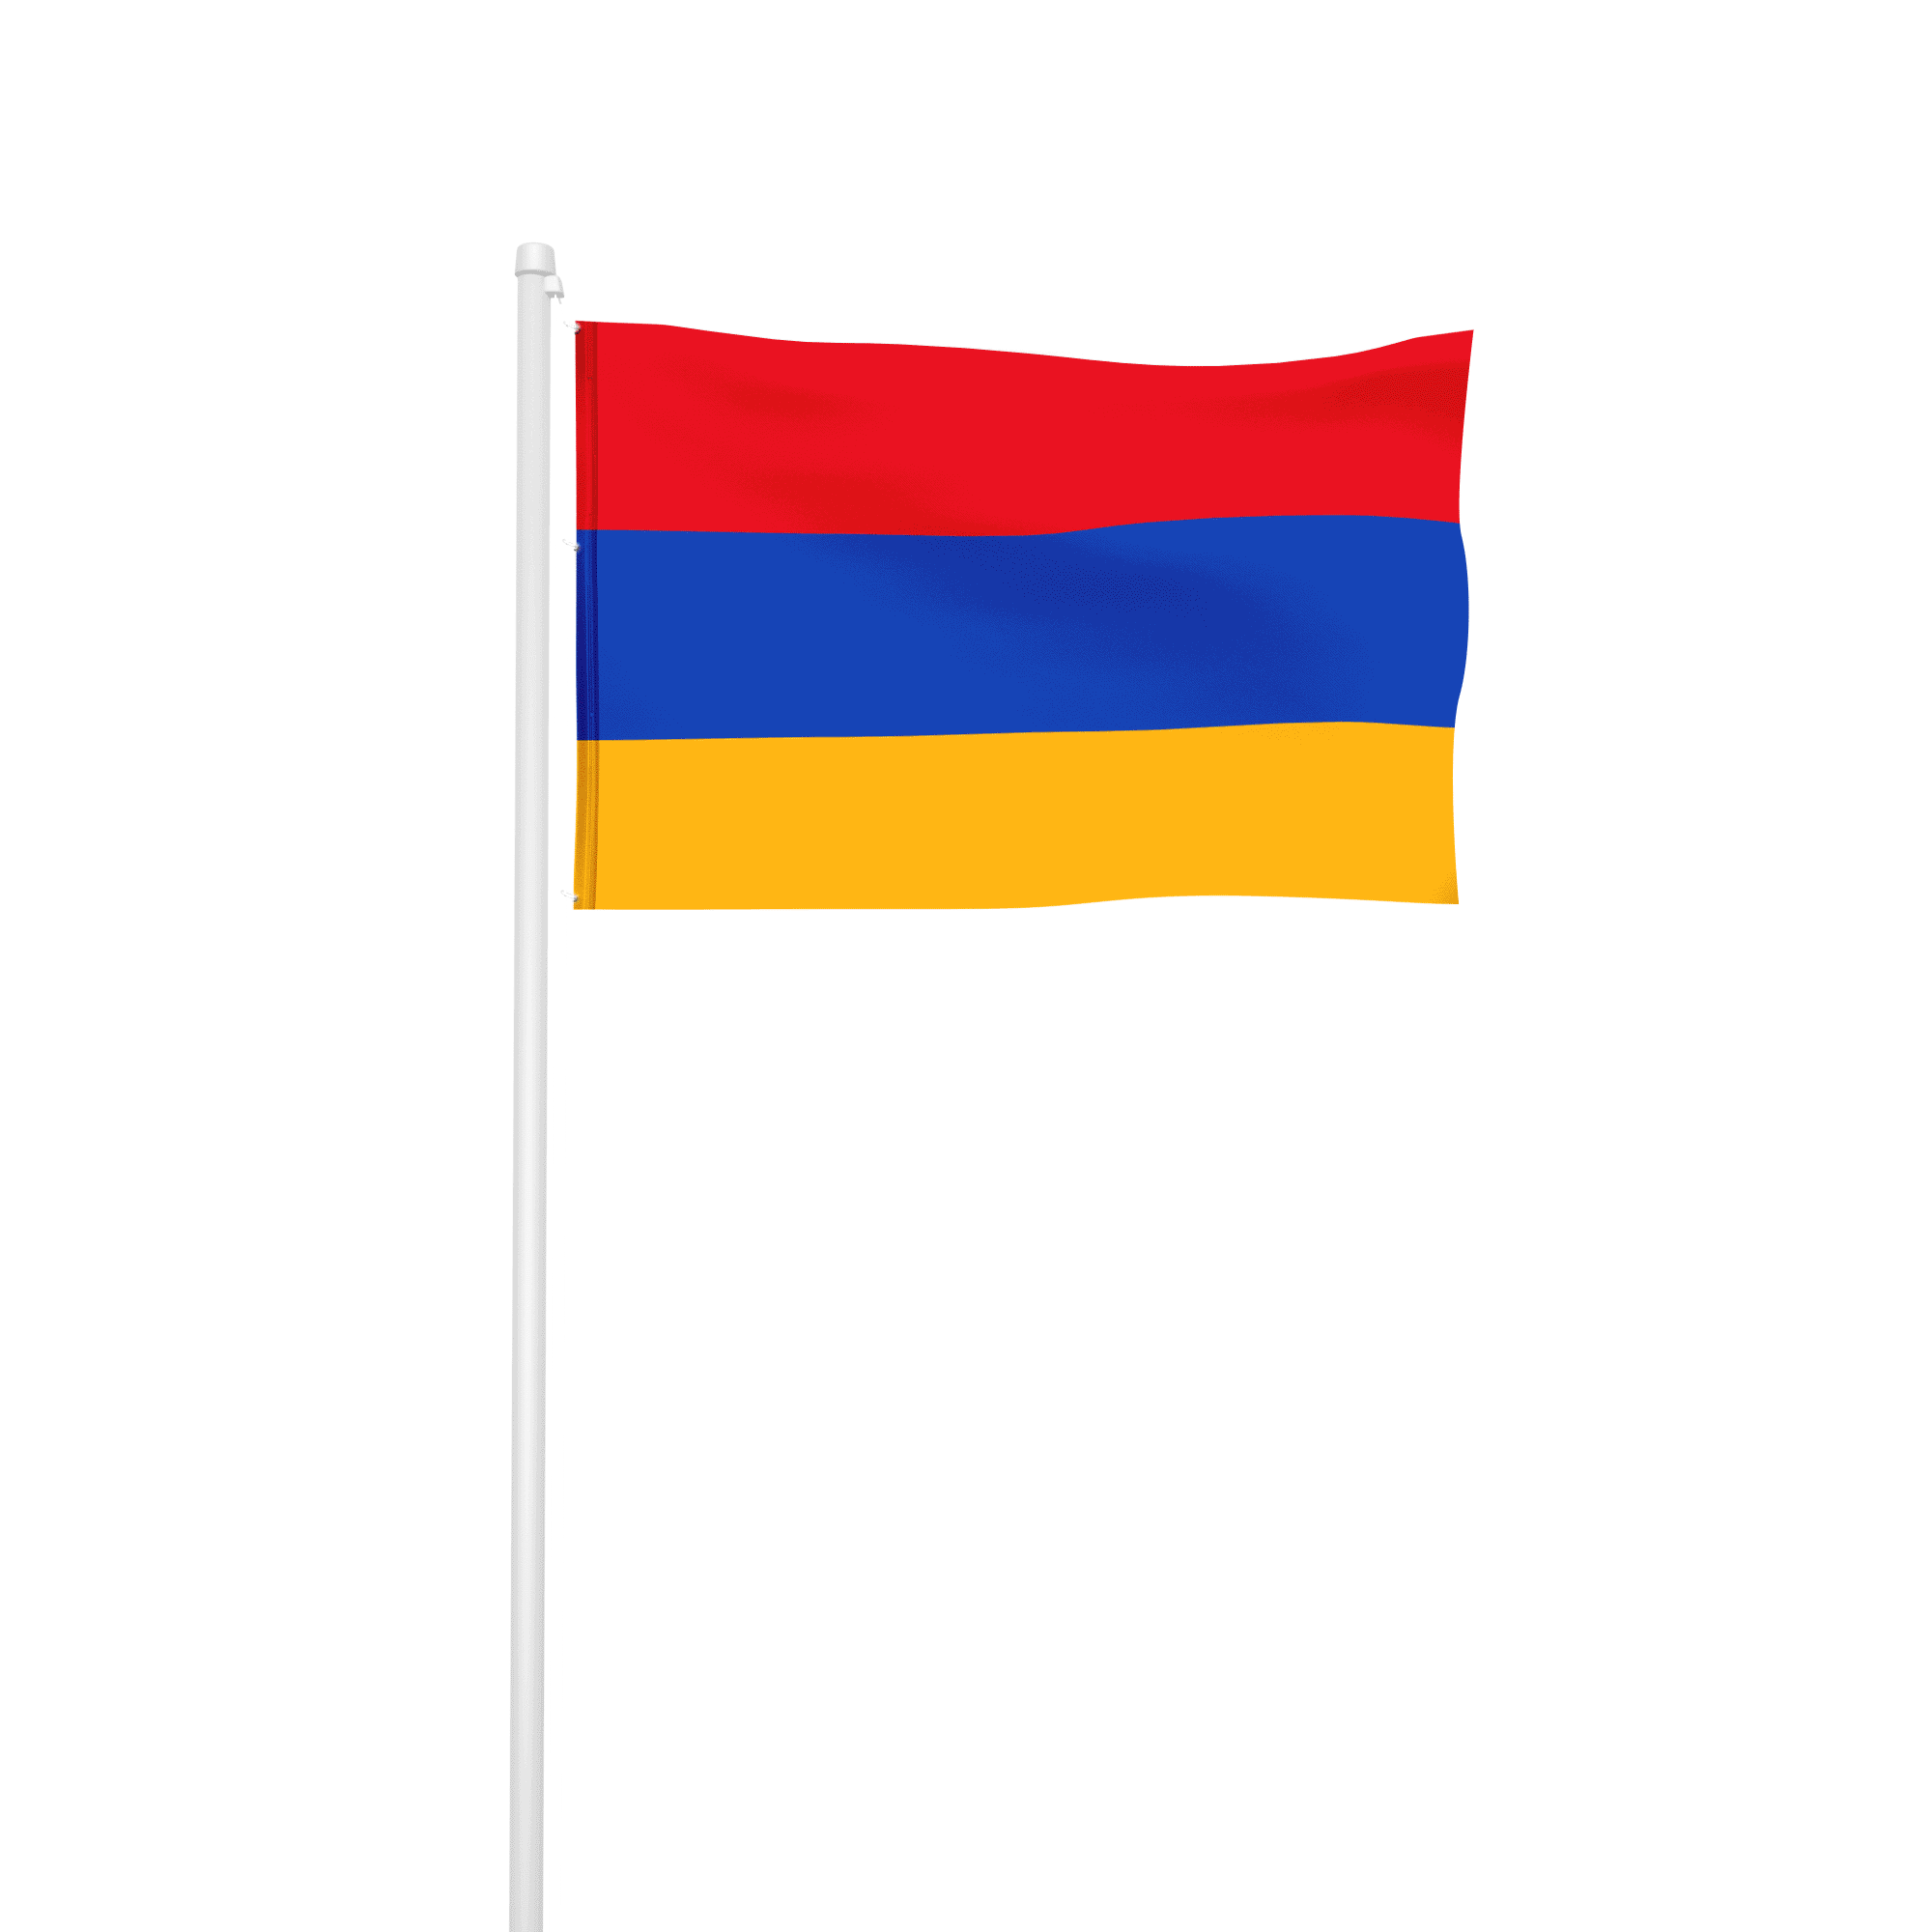 Armenien - Hissfahne